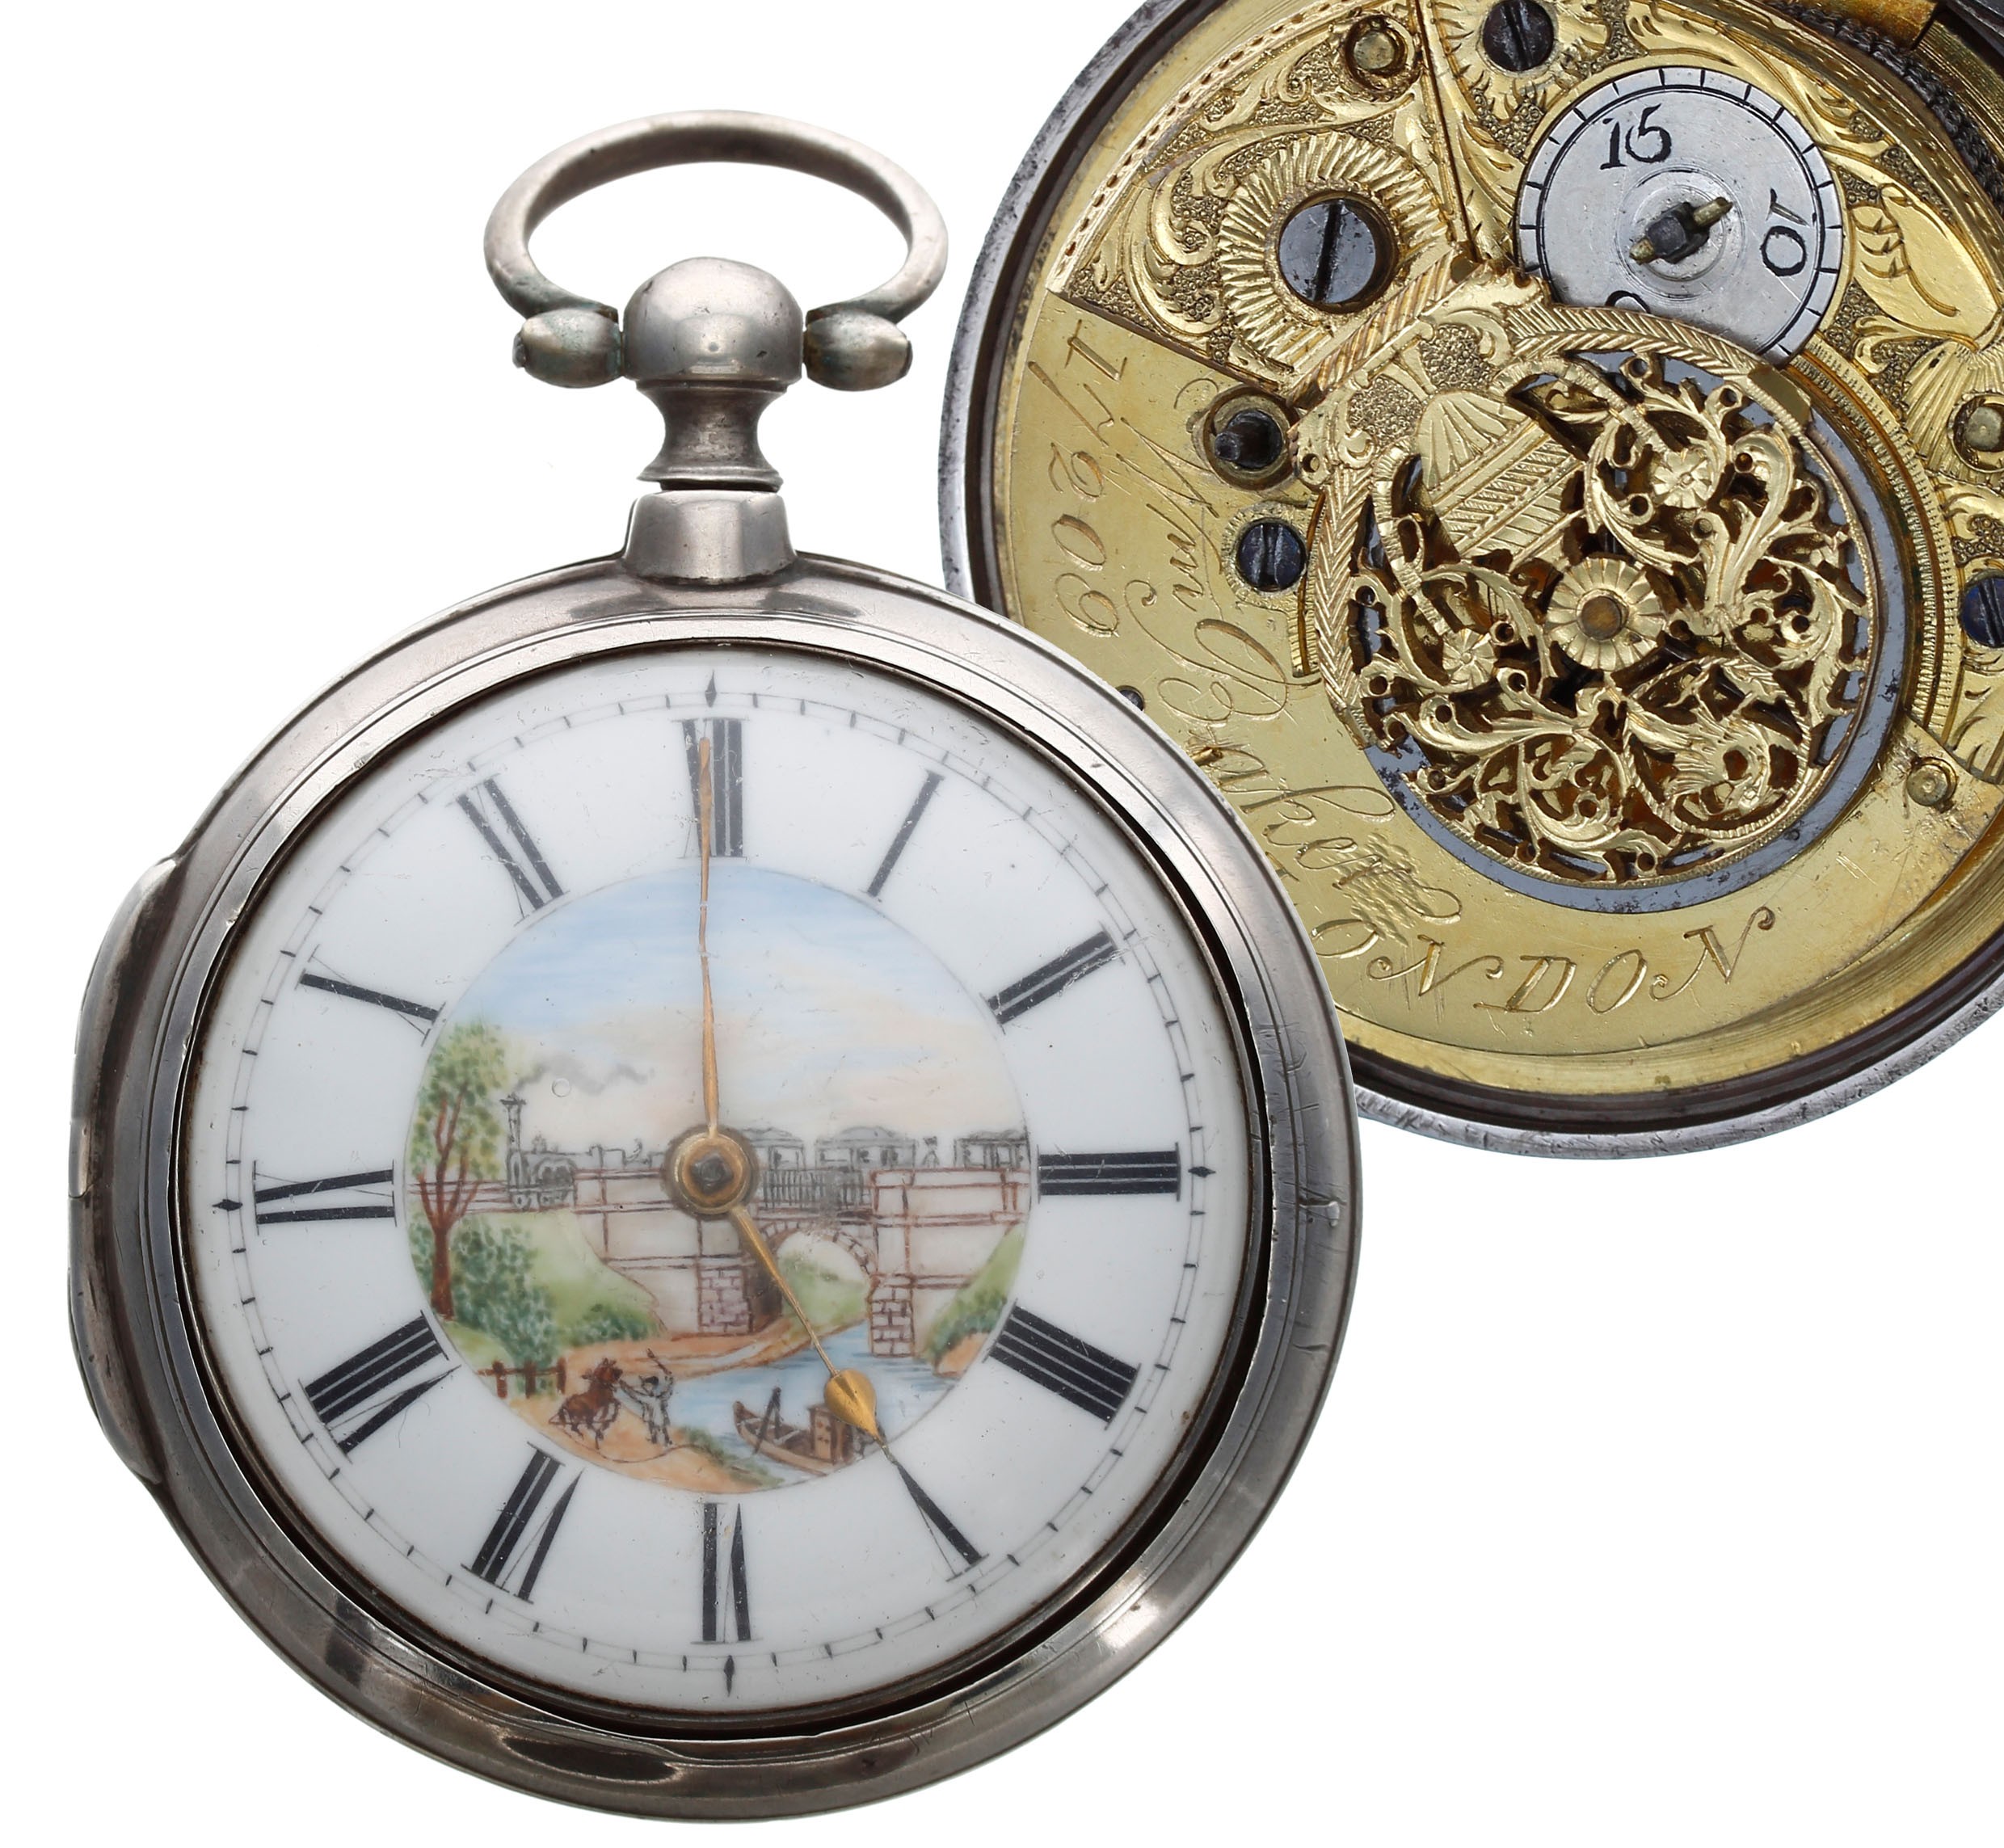 William Baker, London - George III silver pair cased verge pocket watch, London 1805, signed fusee